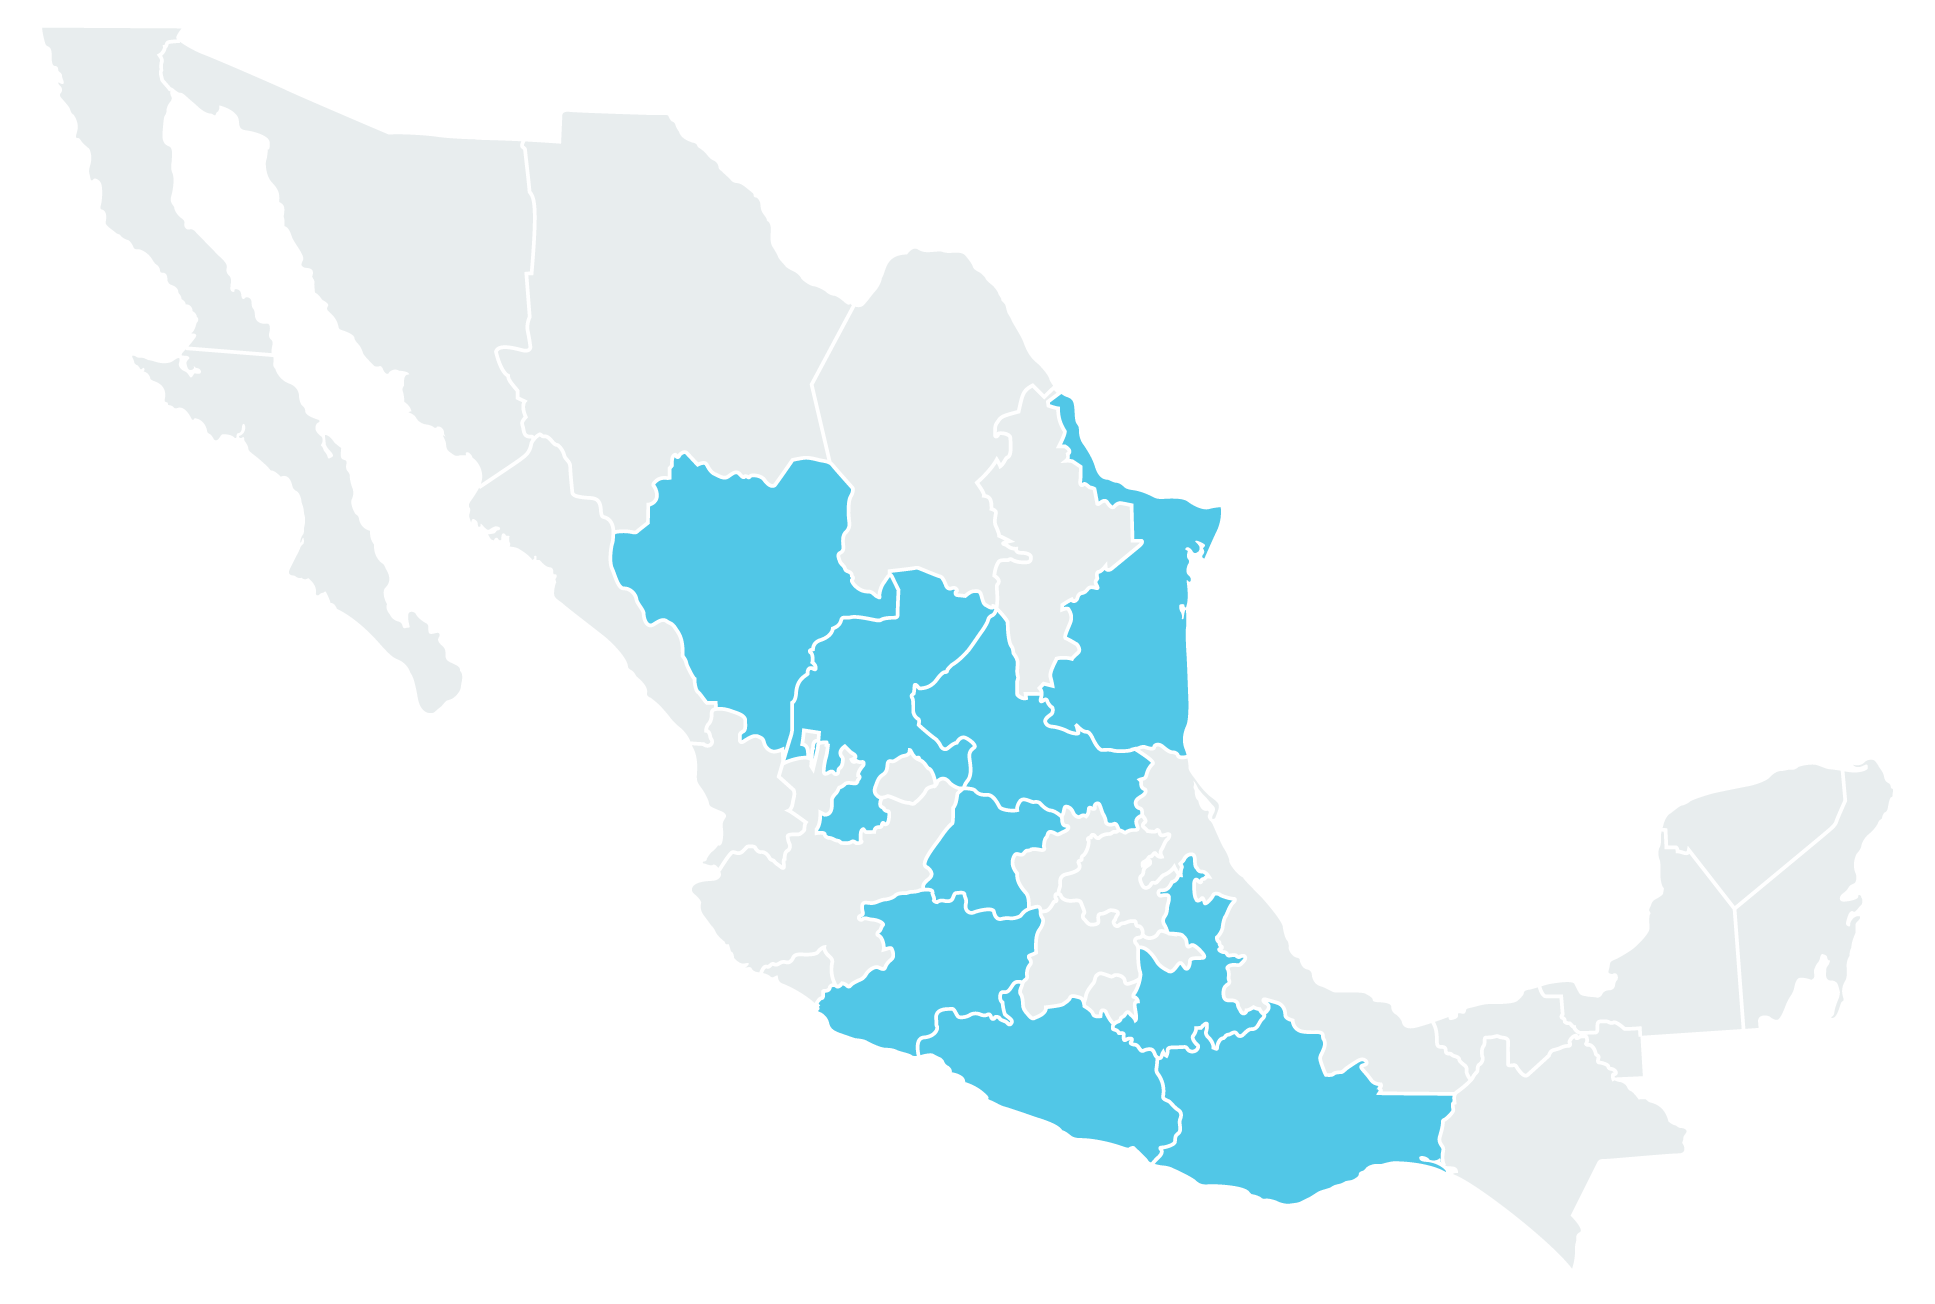 mexico-map